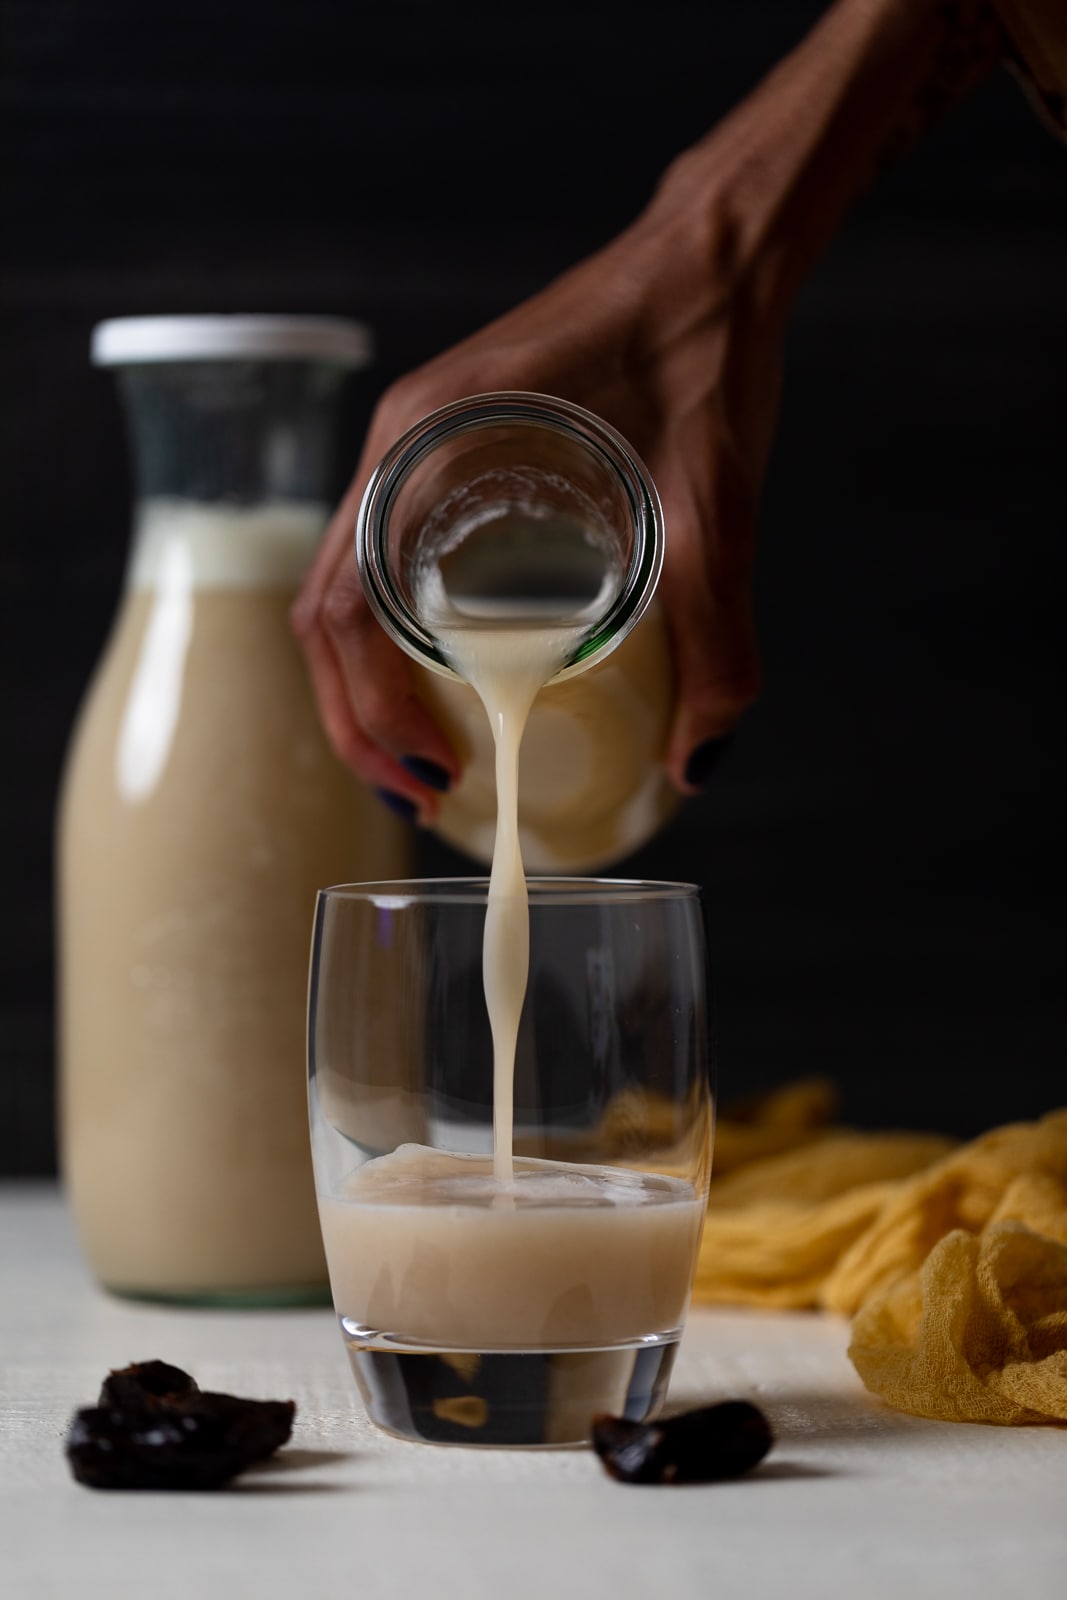 Hand pouring a glass jar of cauliflower milk into a glass